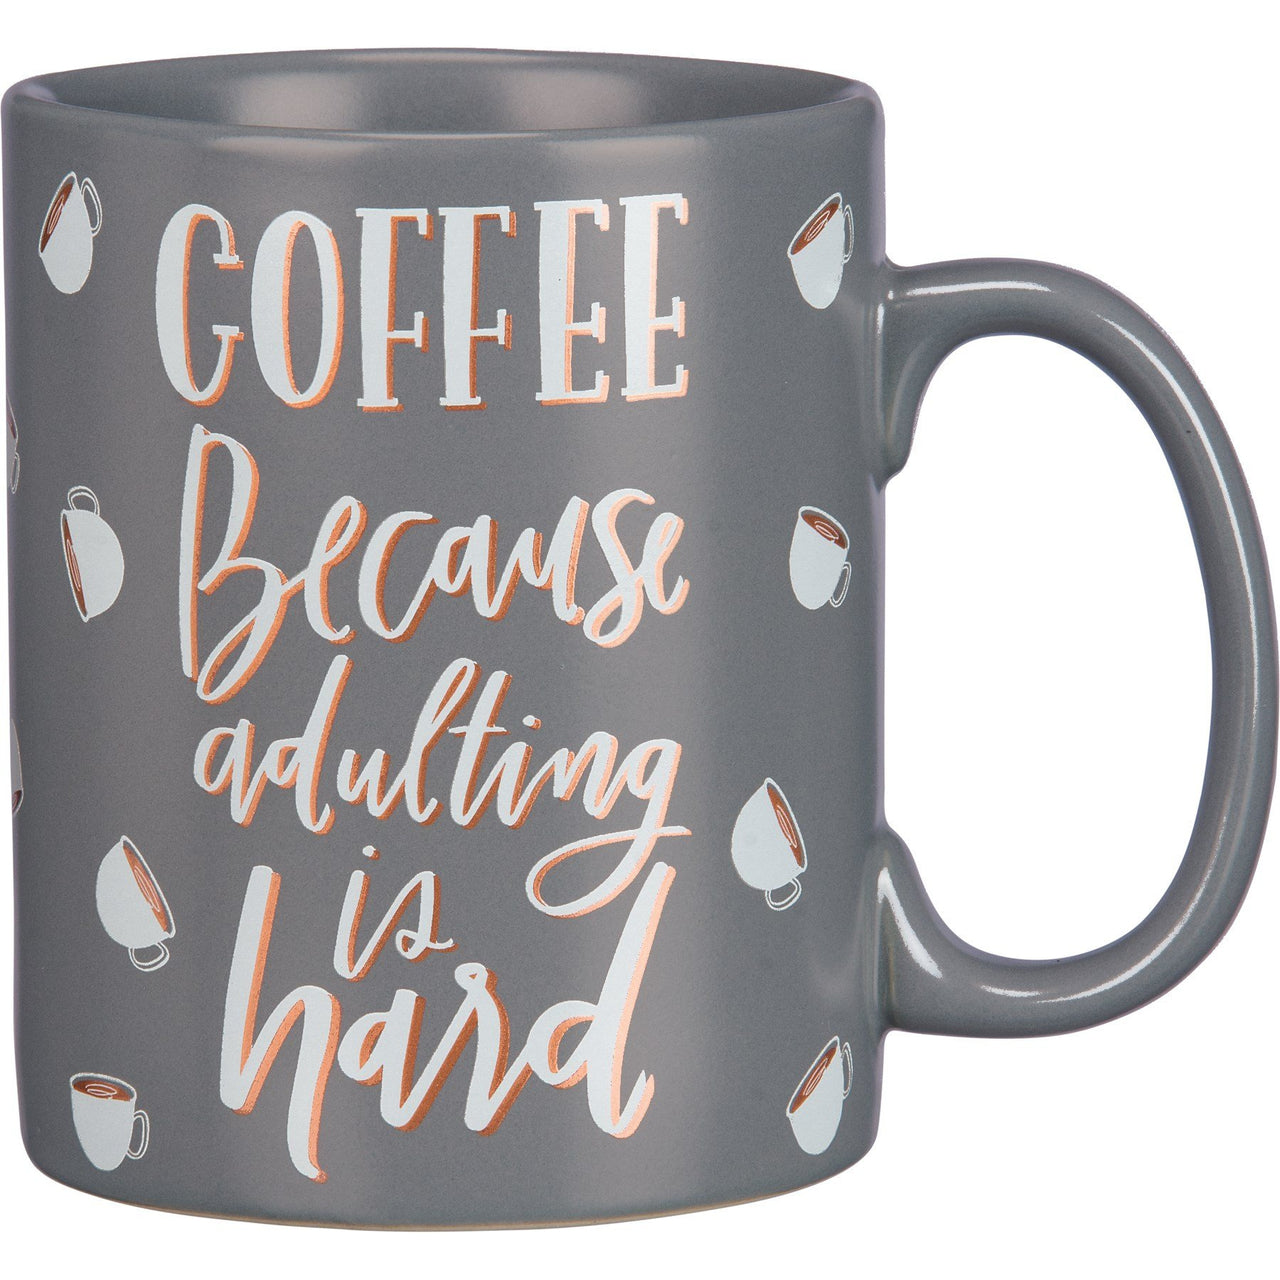 Mug - Coffee Because